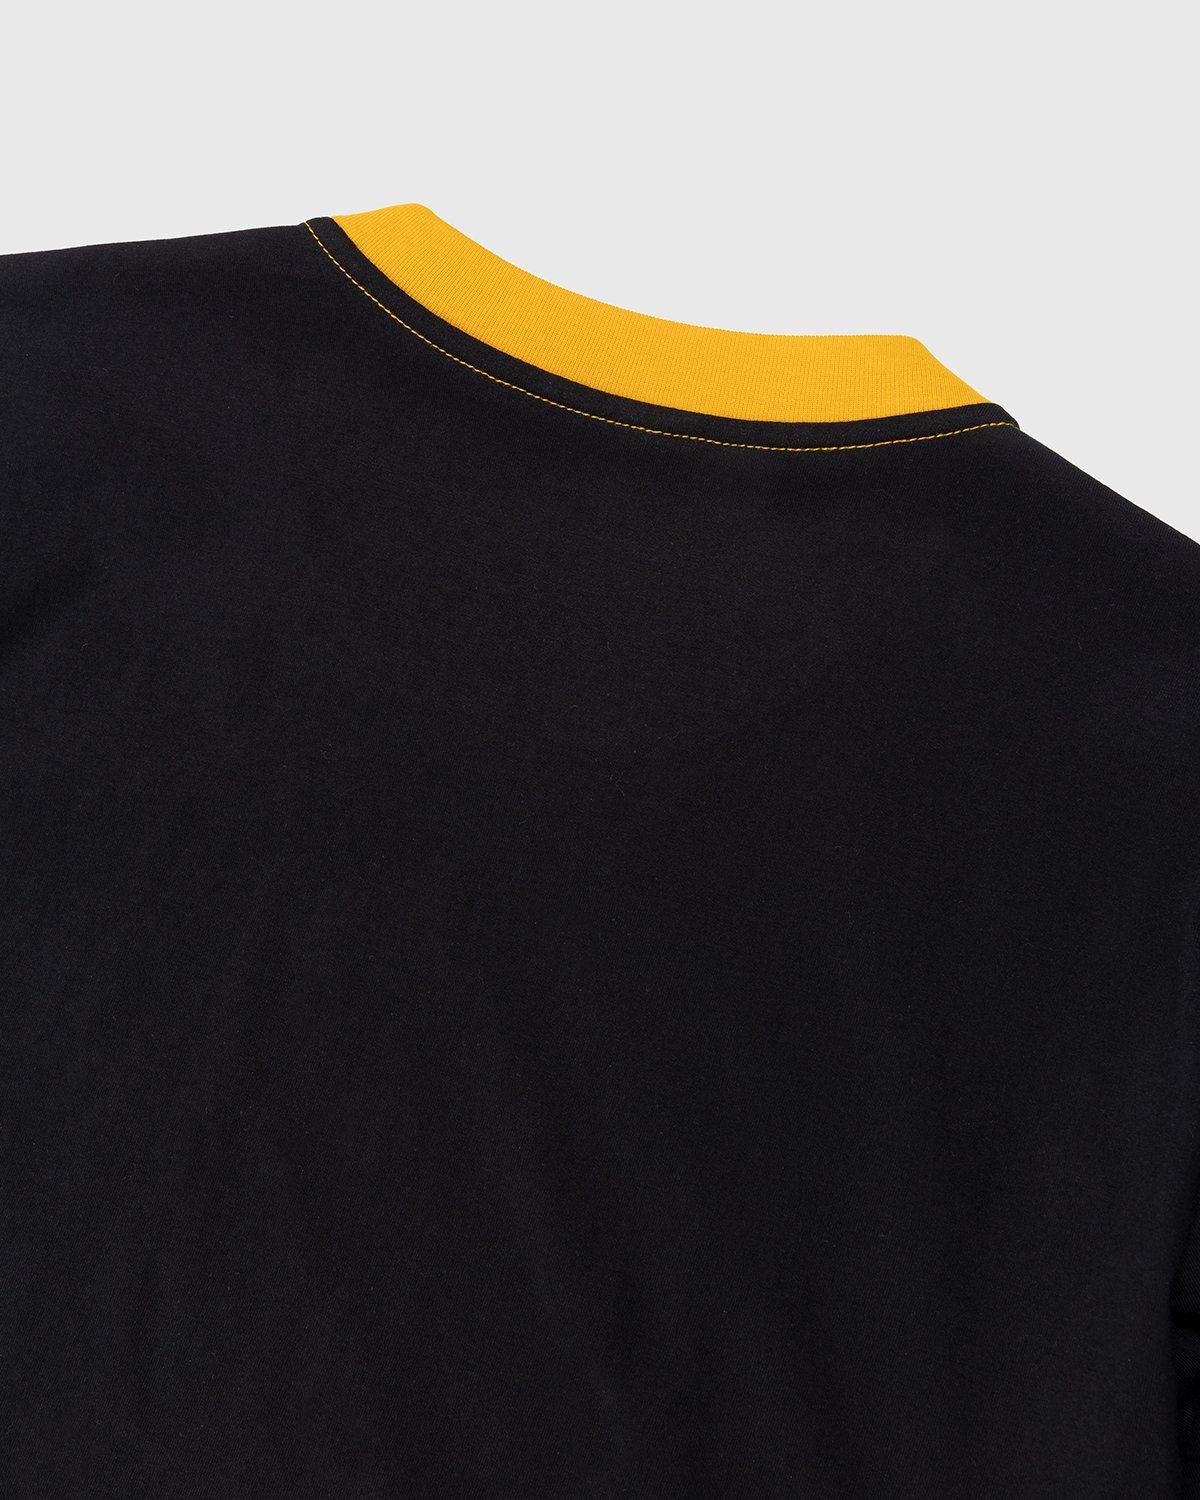 Marni – Stripe Logo Bio Jersey T-Shirt Black/Gold - Tops - Yellow - Image 3